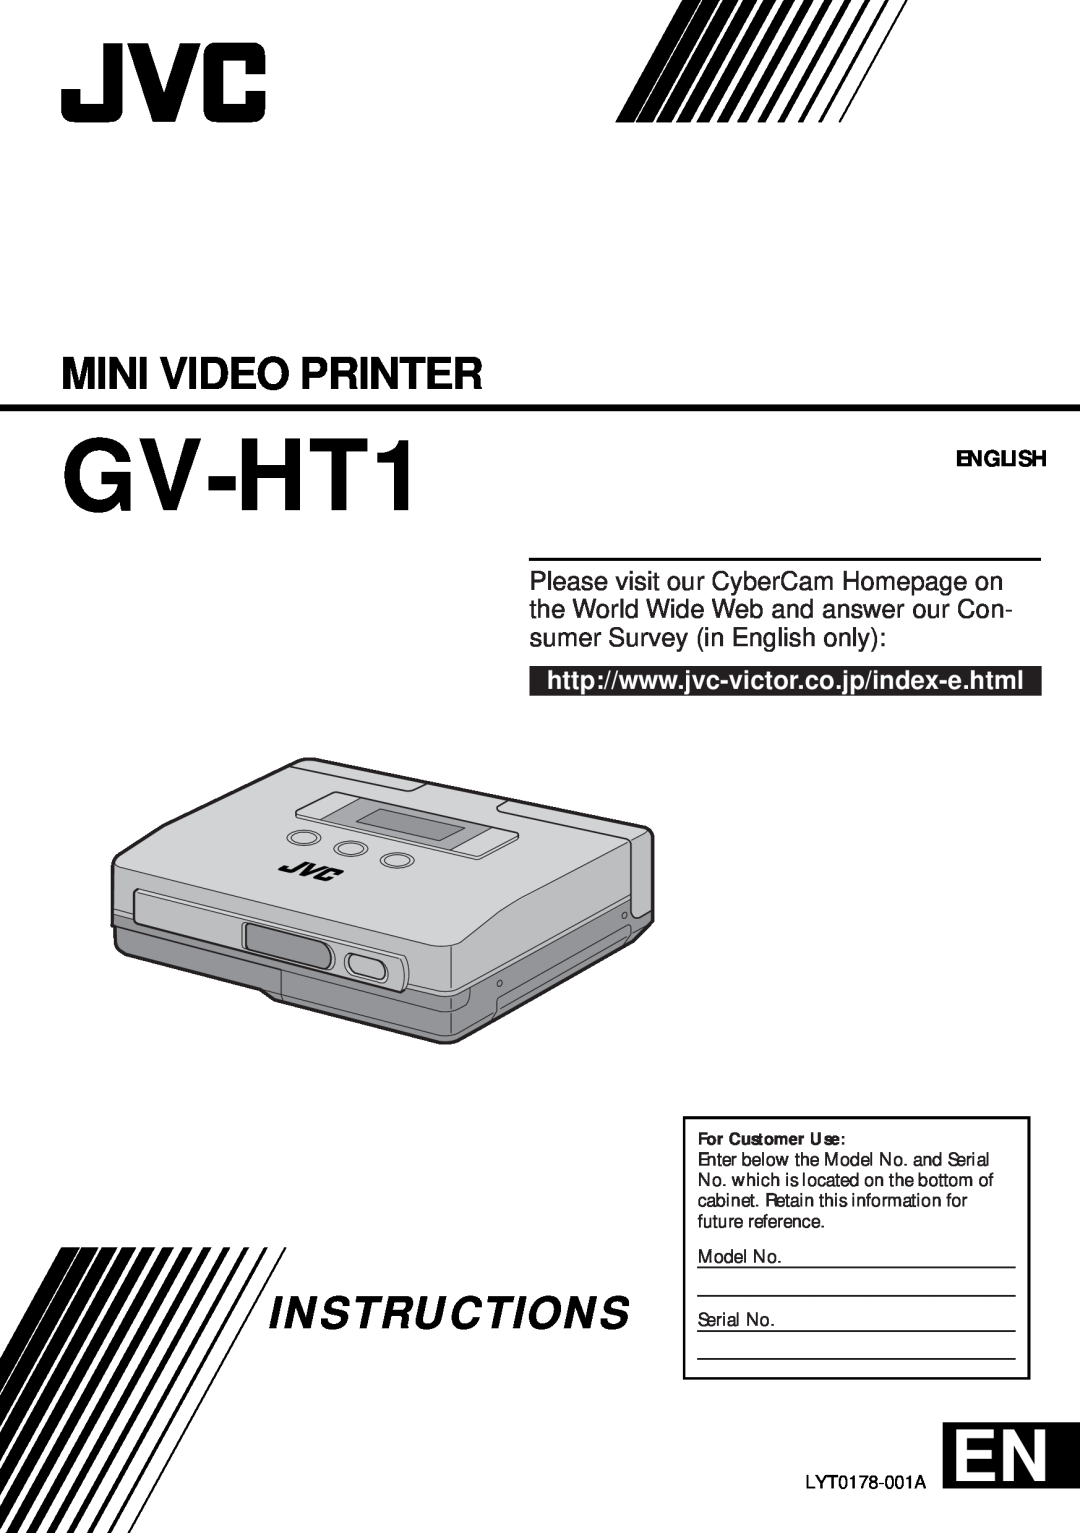 JVC GV-HT1U manual Mini Video Printer, Instructions, English, For Customer Use 